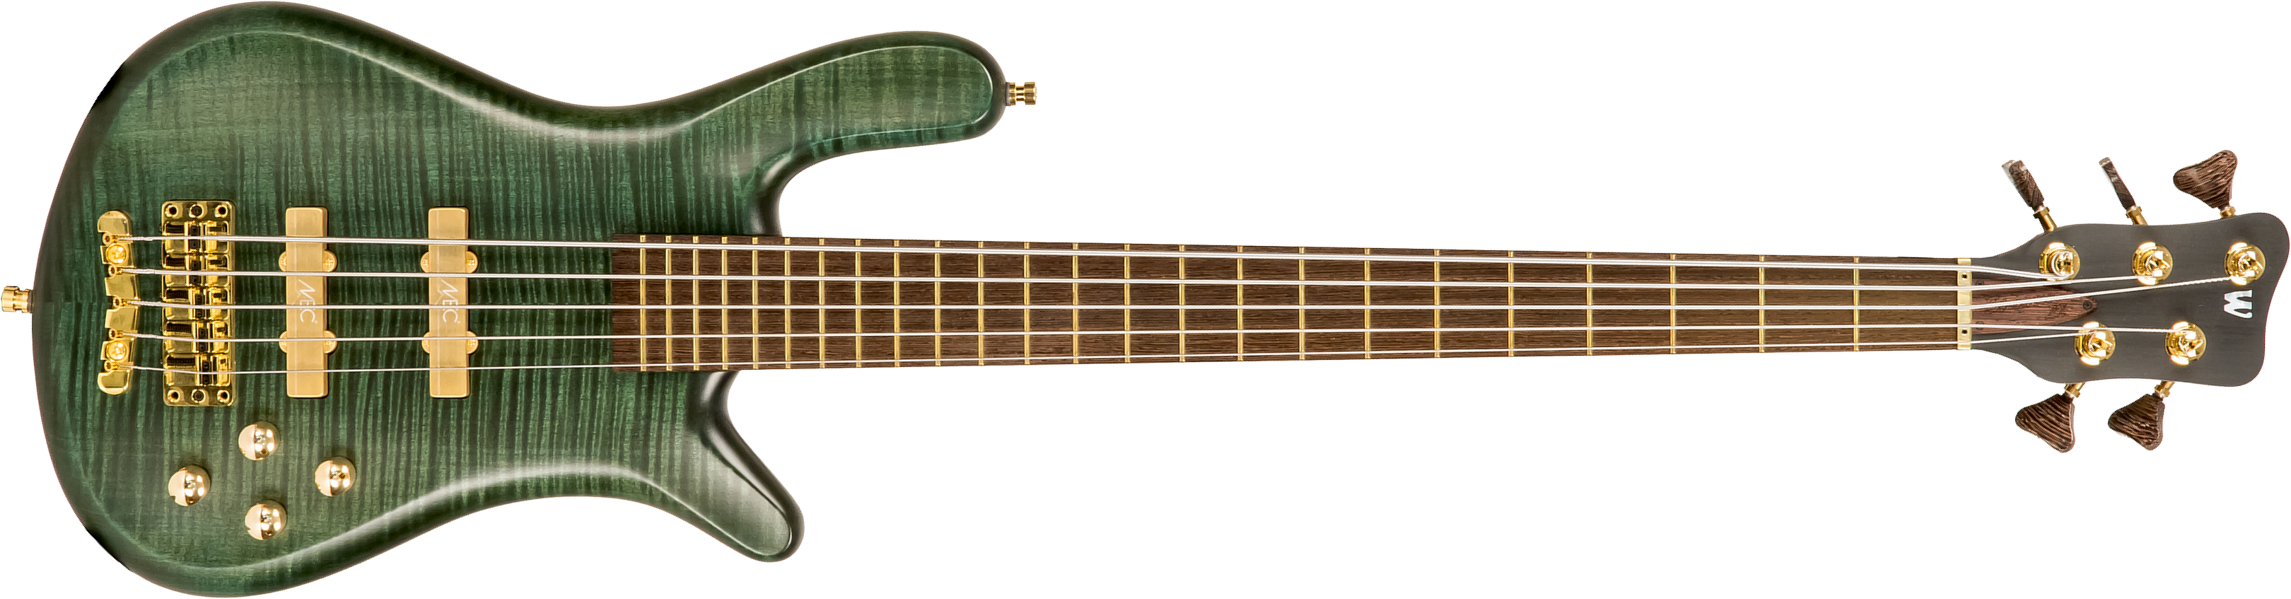 Warwick Custom Shop Streamer Lx 5-strings - Petrol Green Trans Satin - Solid body electric bass - Main picture